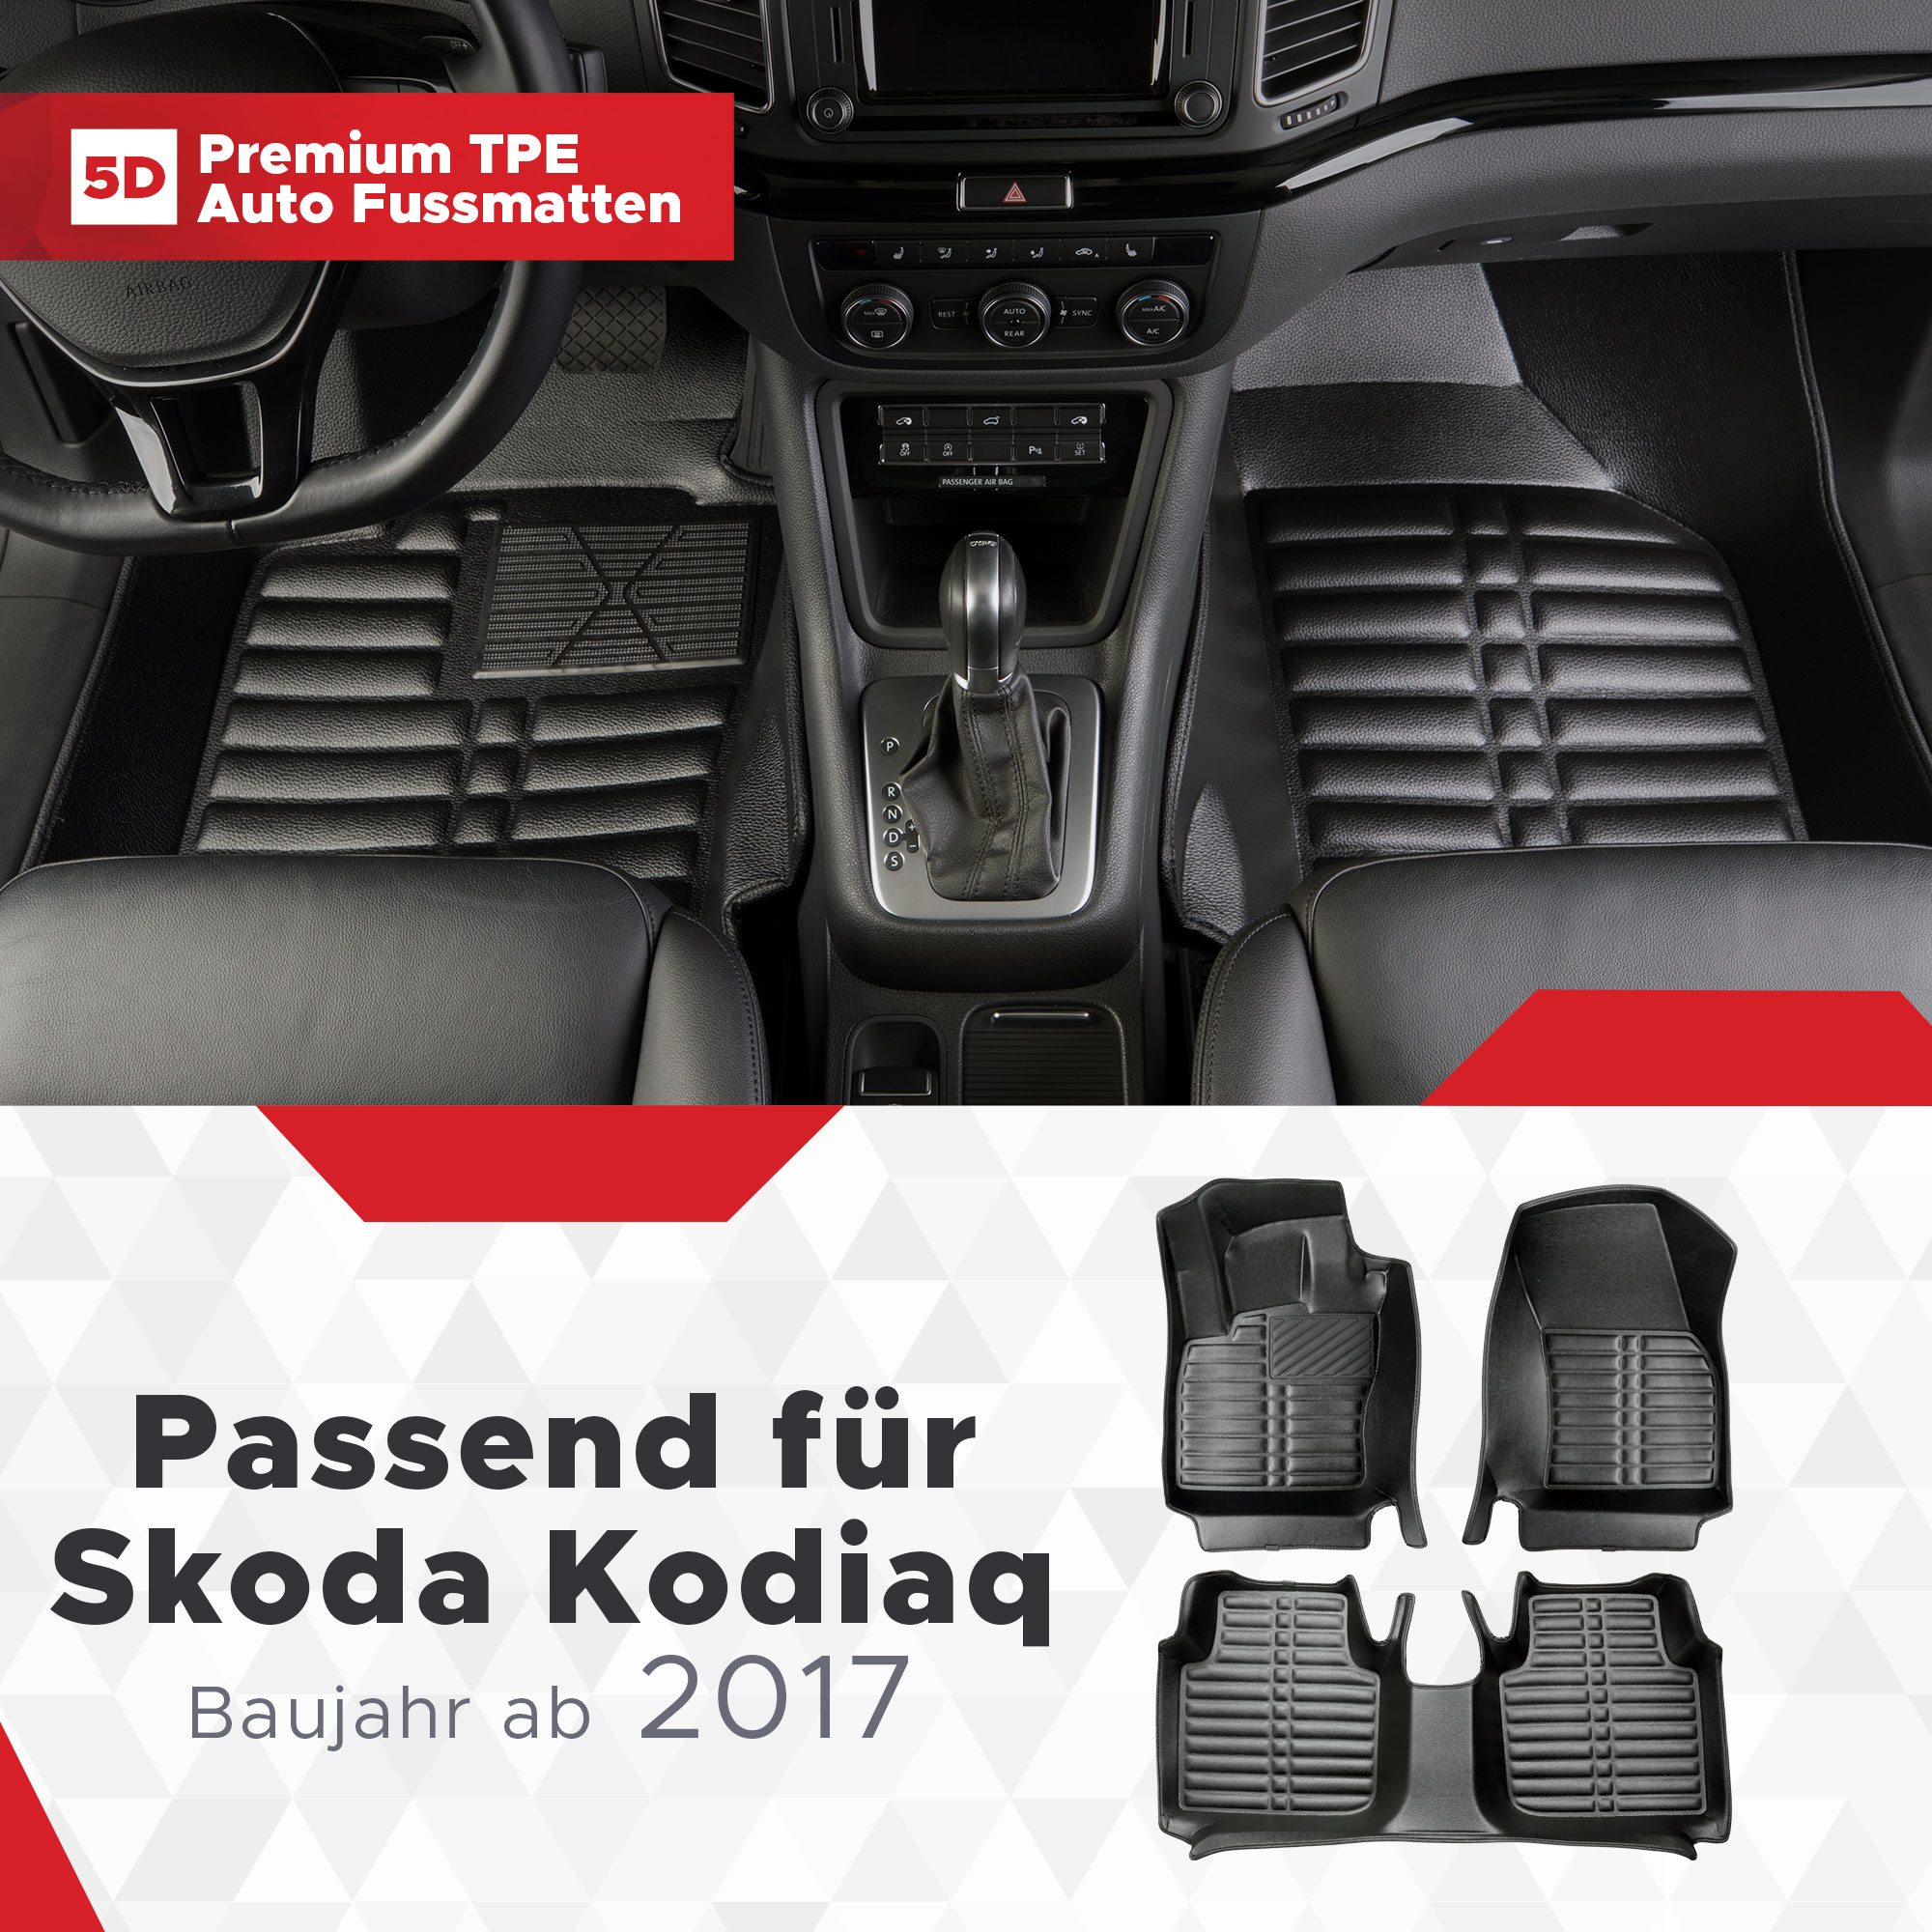 5D Premium Car Floor Mats TPE Set fits Skoda Kodiaq Year of